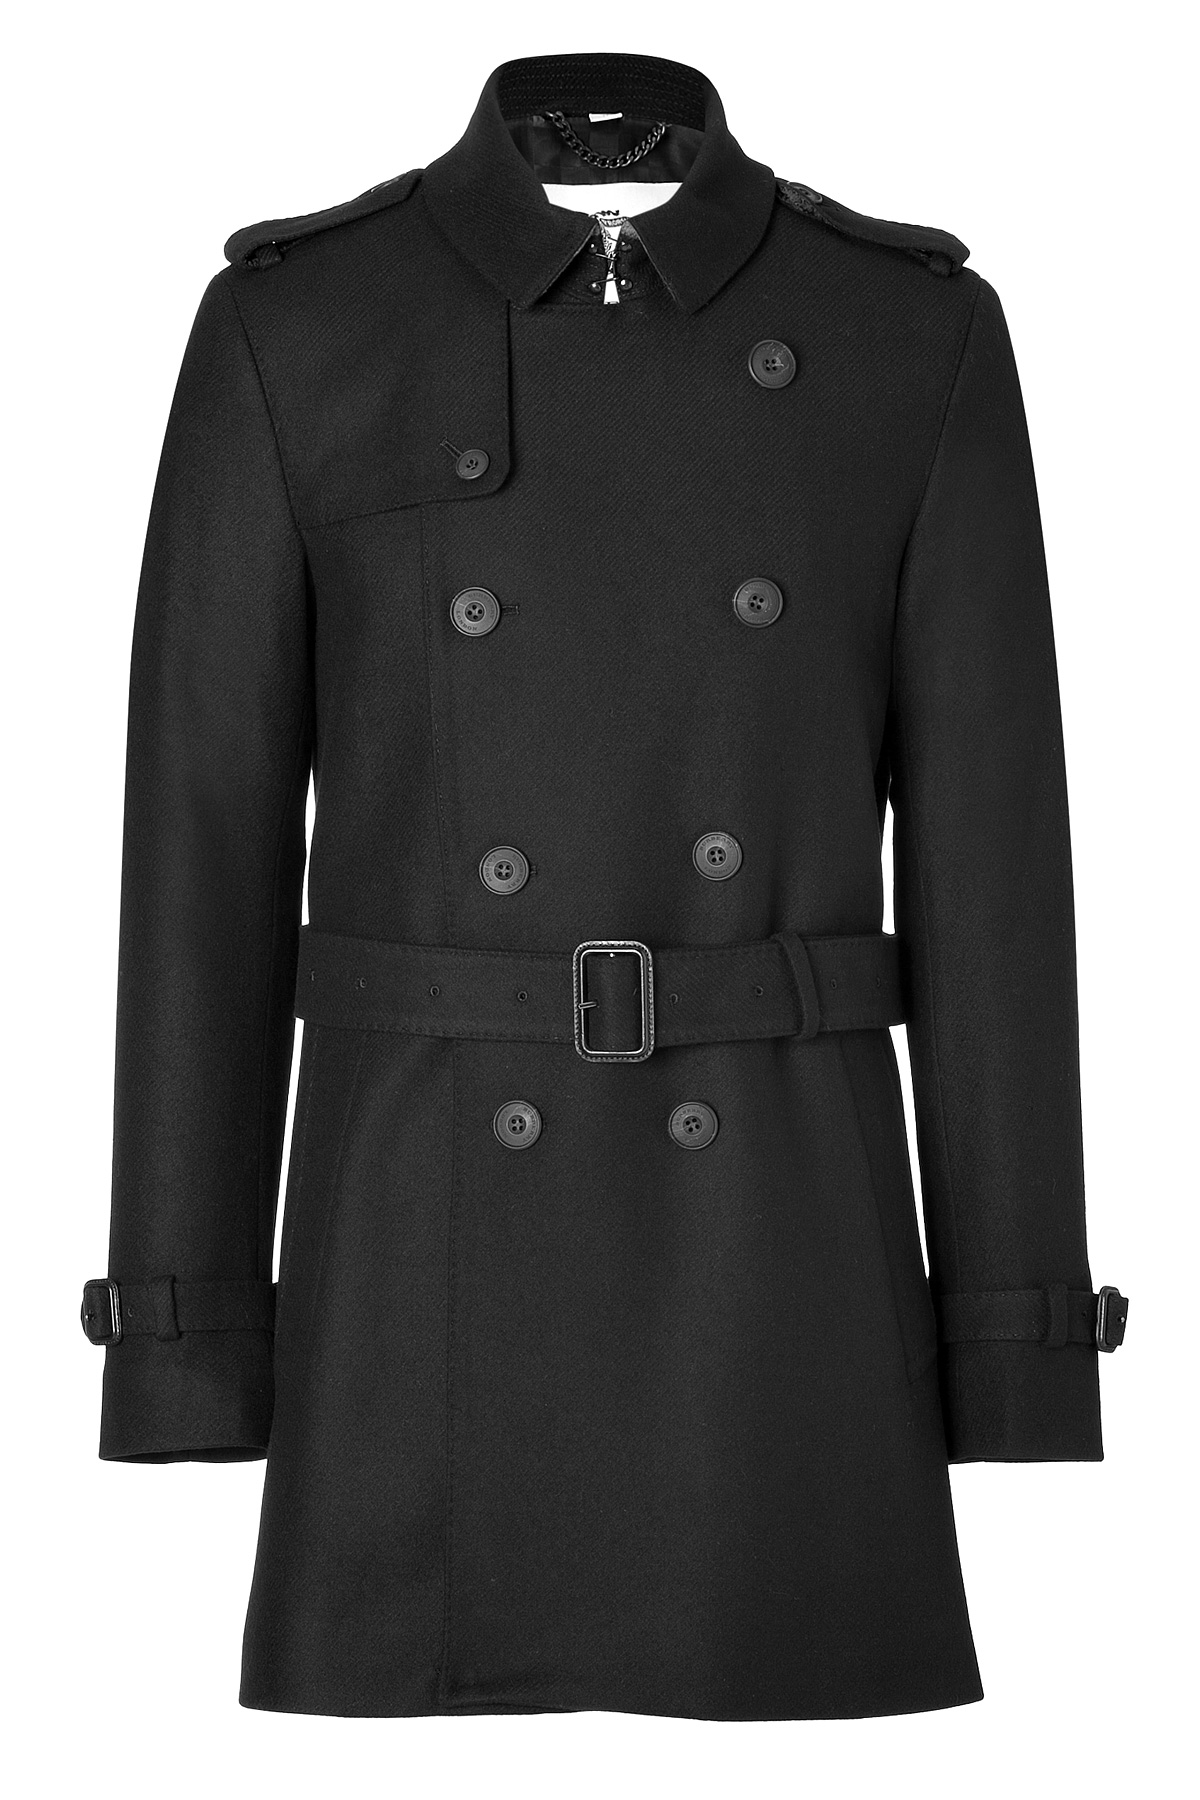 Lyst - Burberry Woolblend Short Britton Trench Coat in Black in Black ...